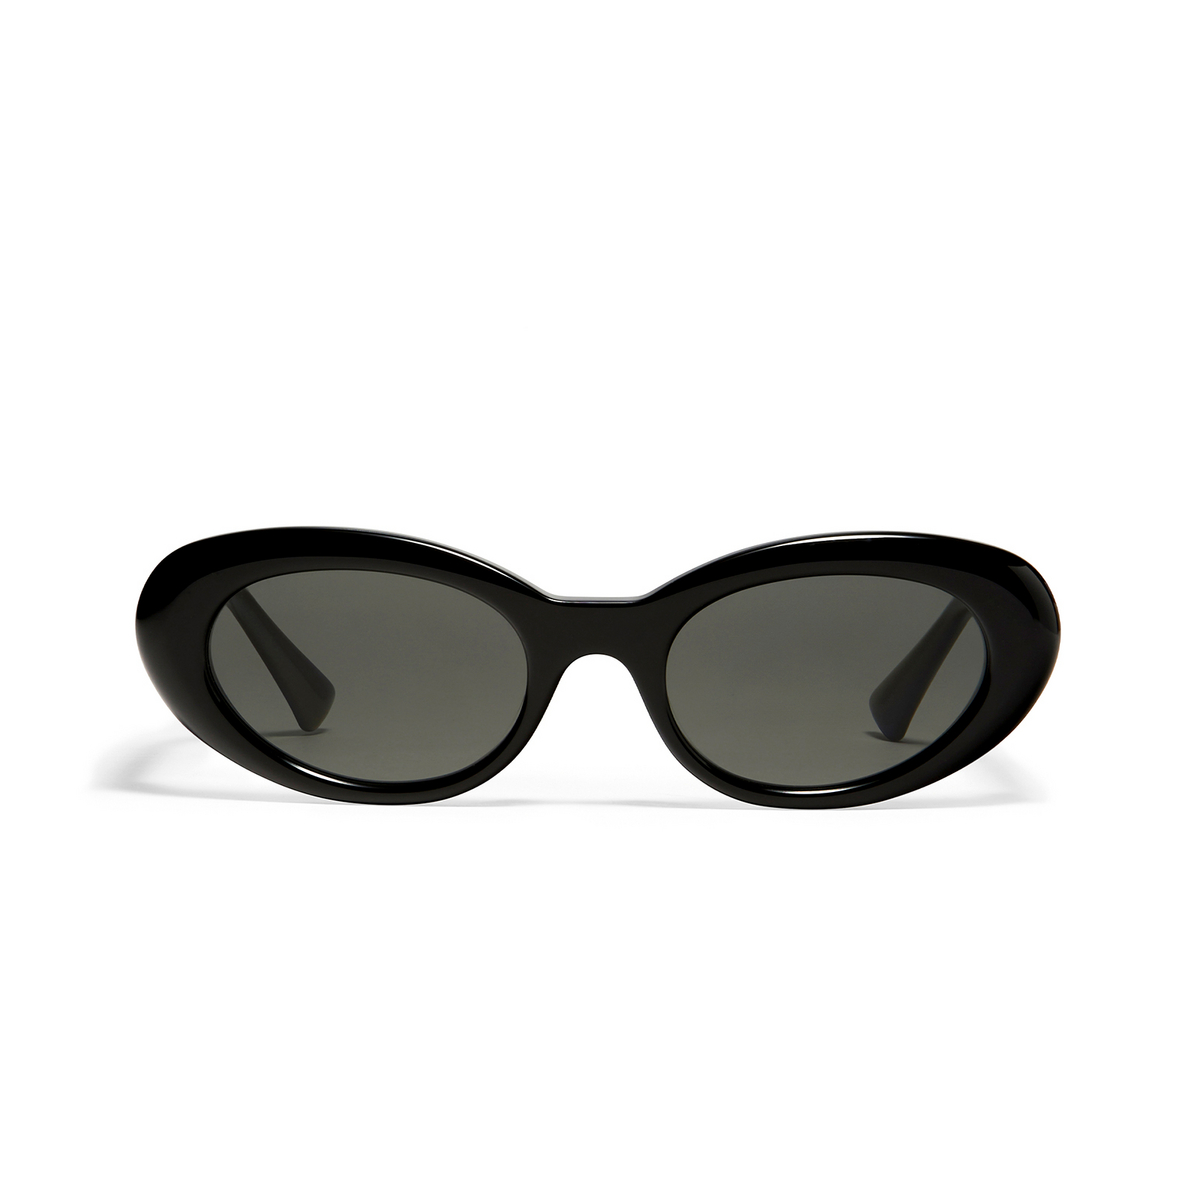 Gentle Monster® Cat-eye Sunglasses: Le color 01 Black - front view